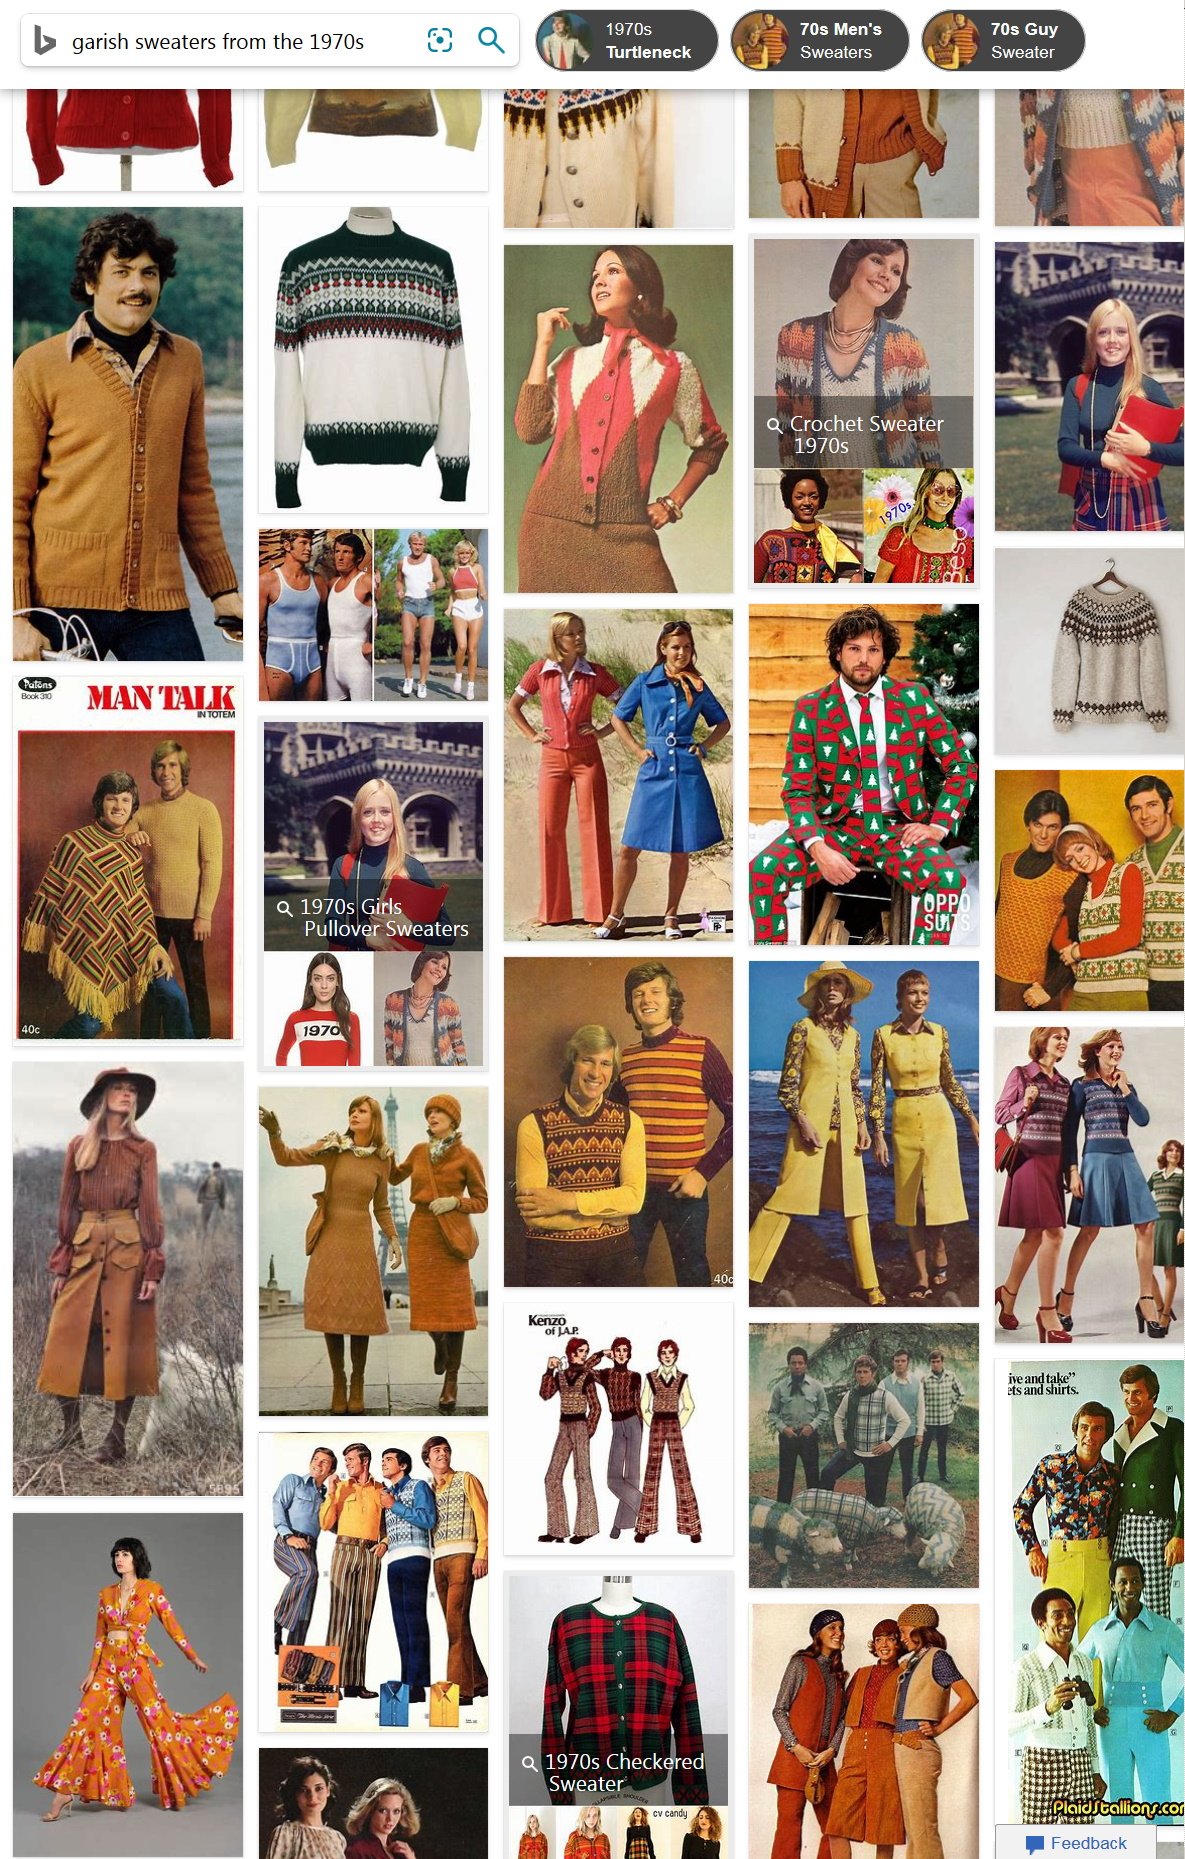 garish-sweaters-from-the-1970s.jpg